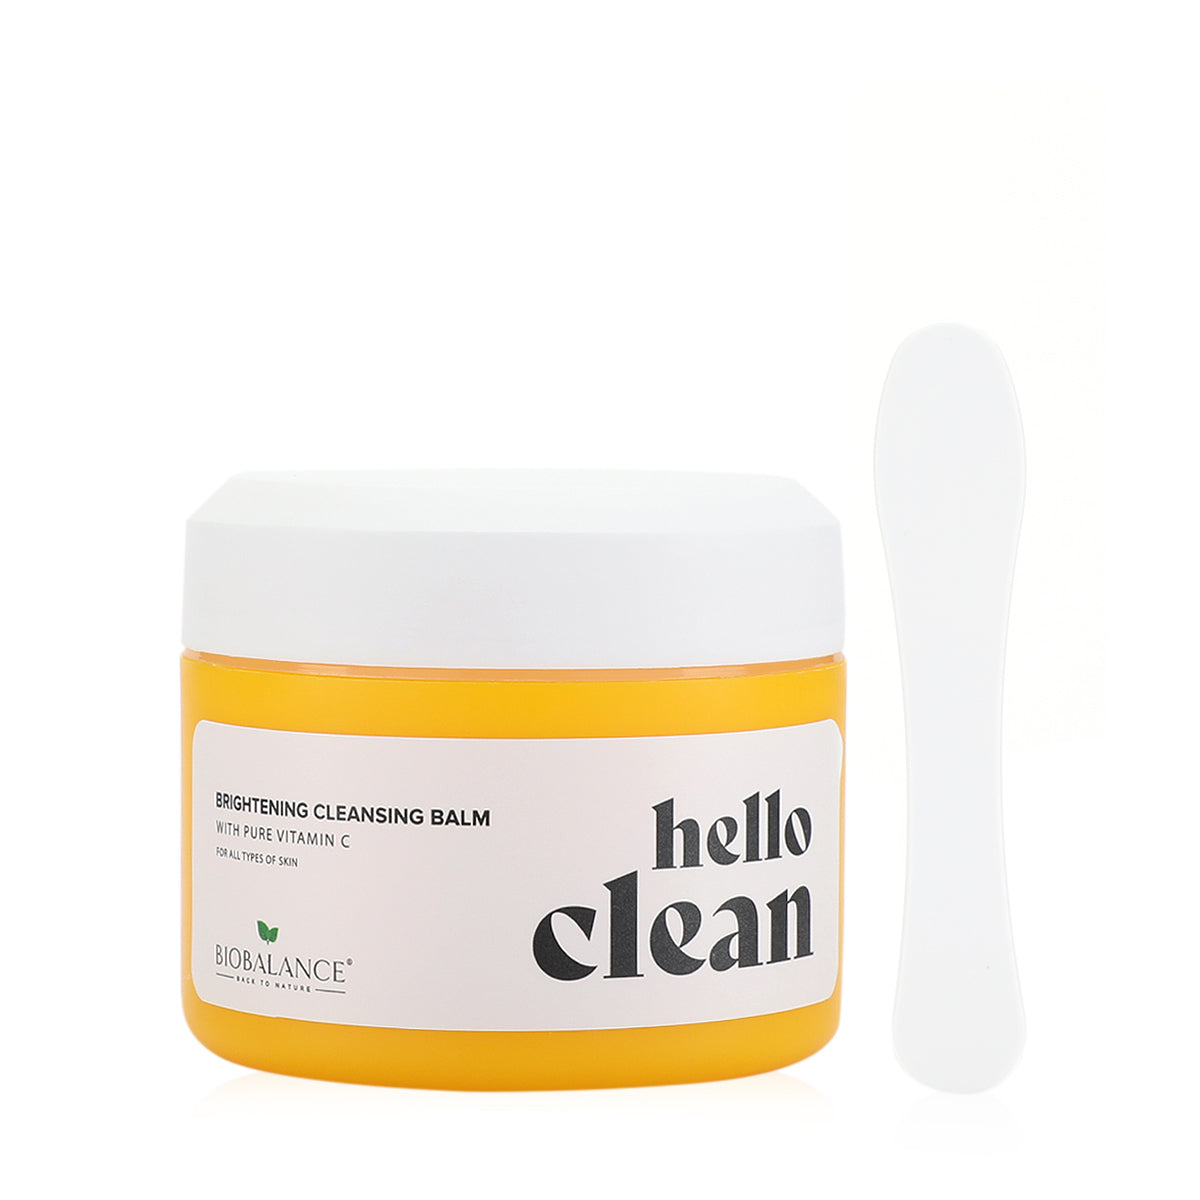 Bio Balance Hello Clean Cleansing Balm Brightening With Pure Vitamin C 100ml